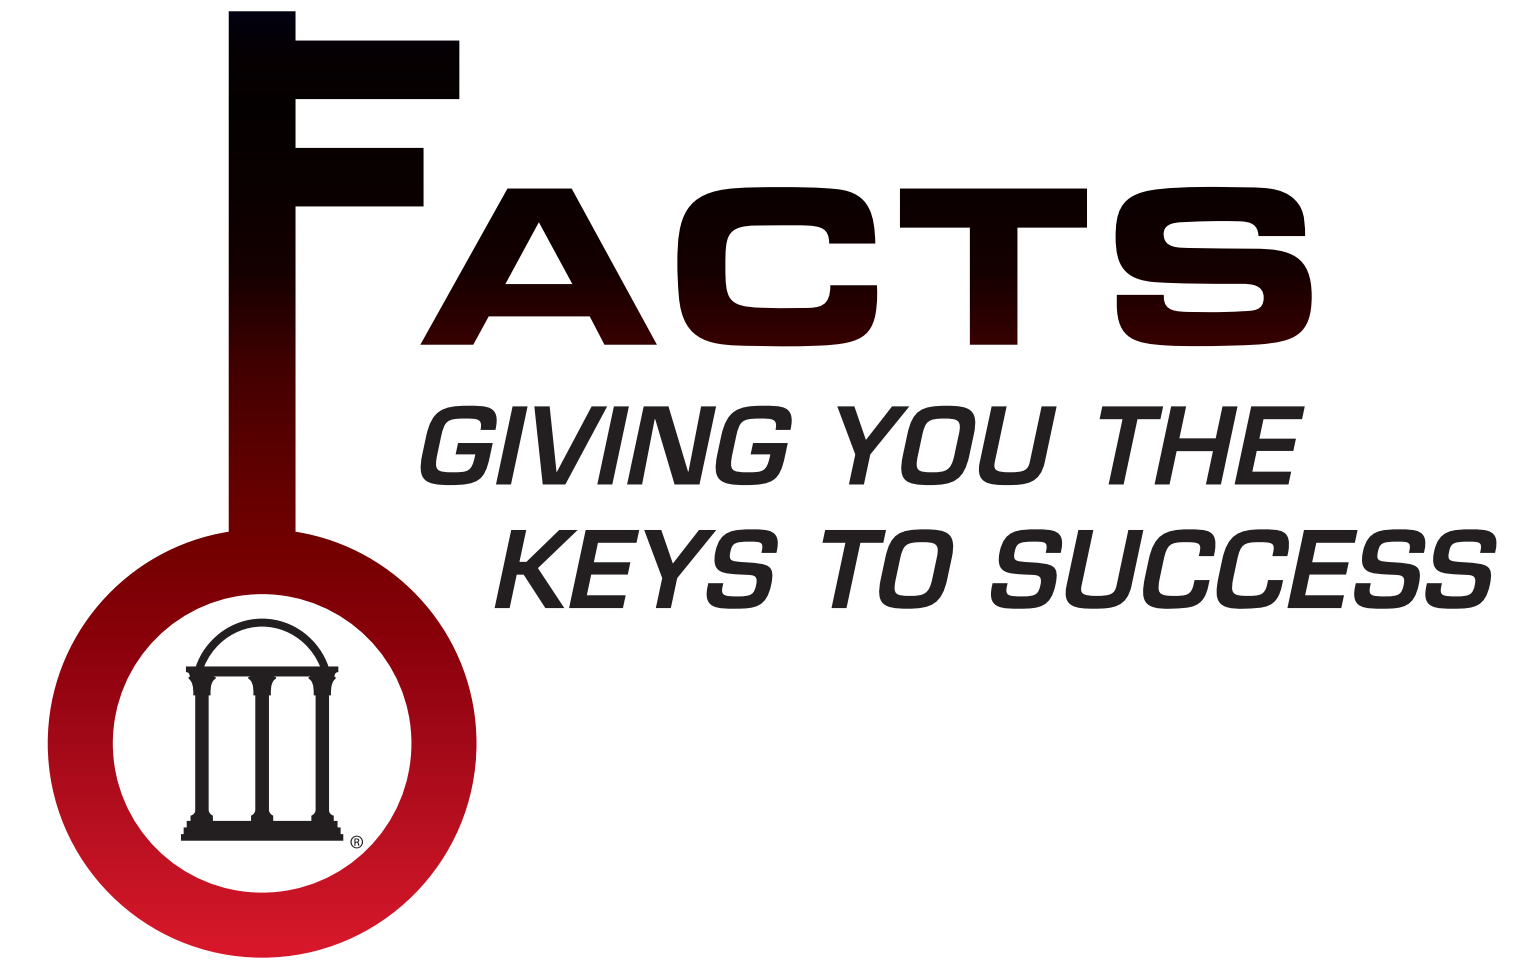 facts logo